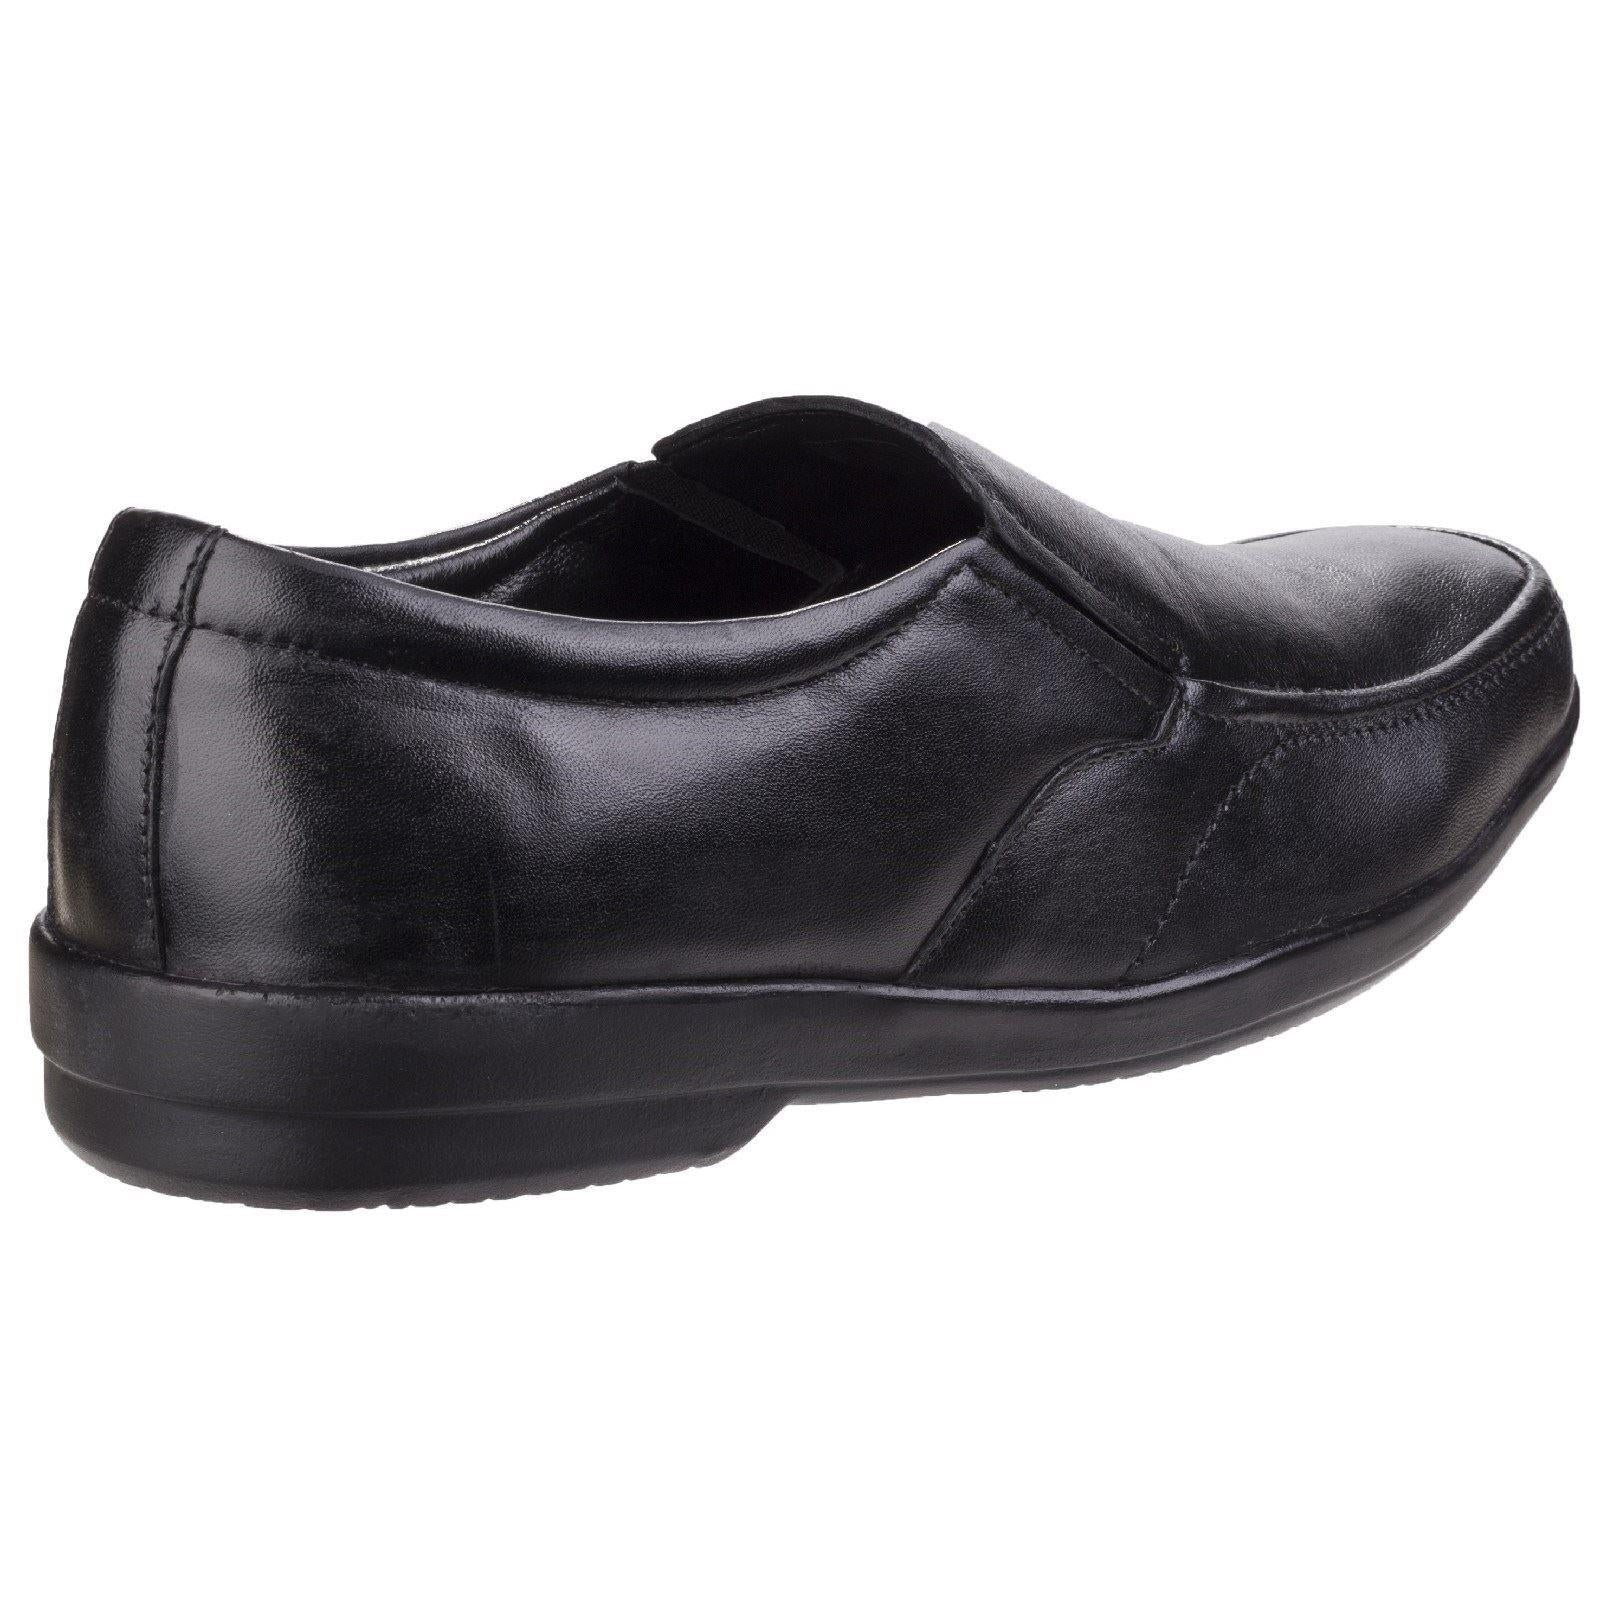 Fleet and Foster Alan black leather slip-on formal shoe